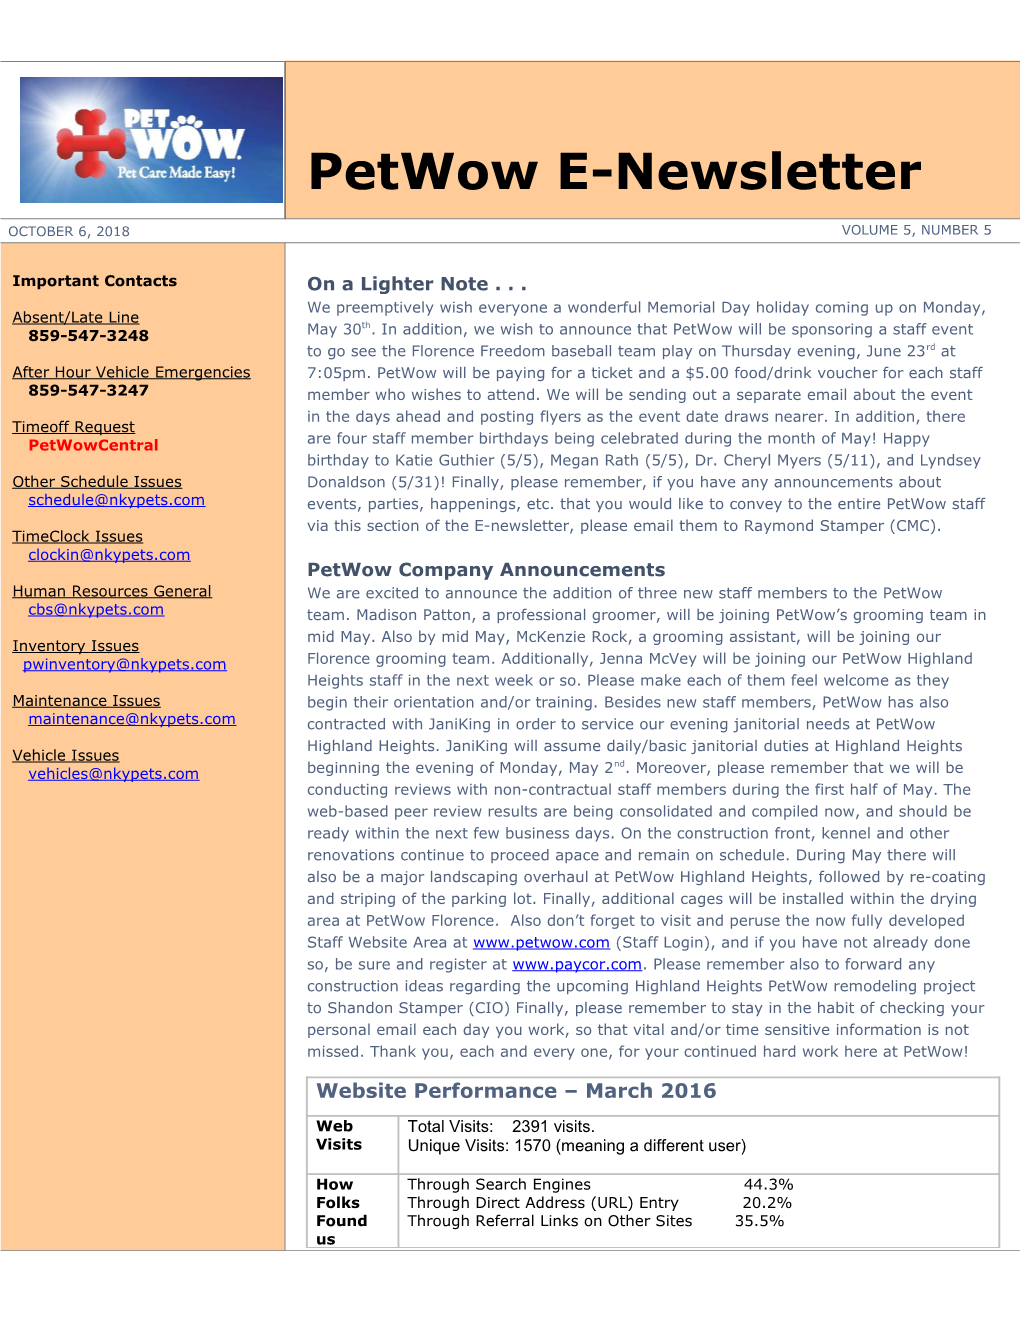 Petwowe-Newsletter